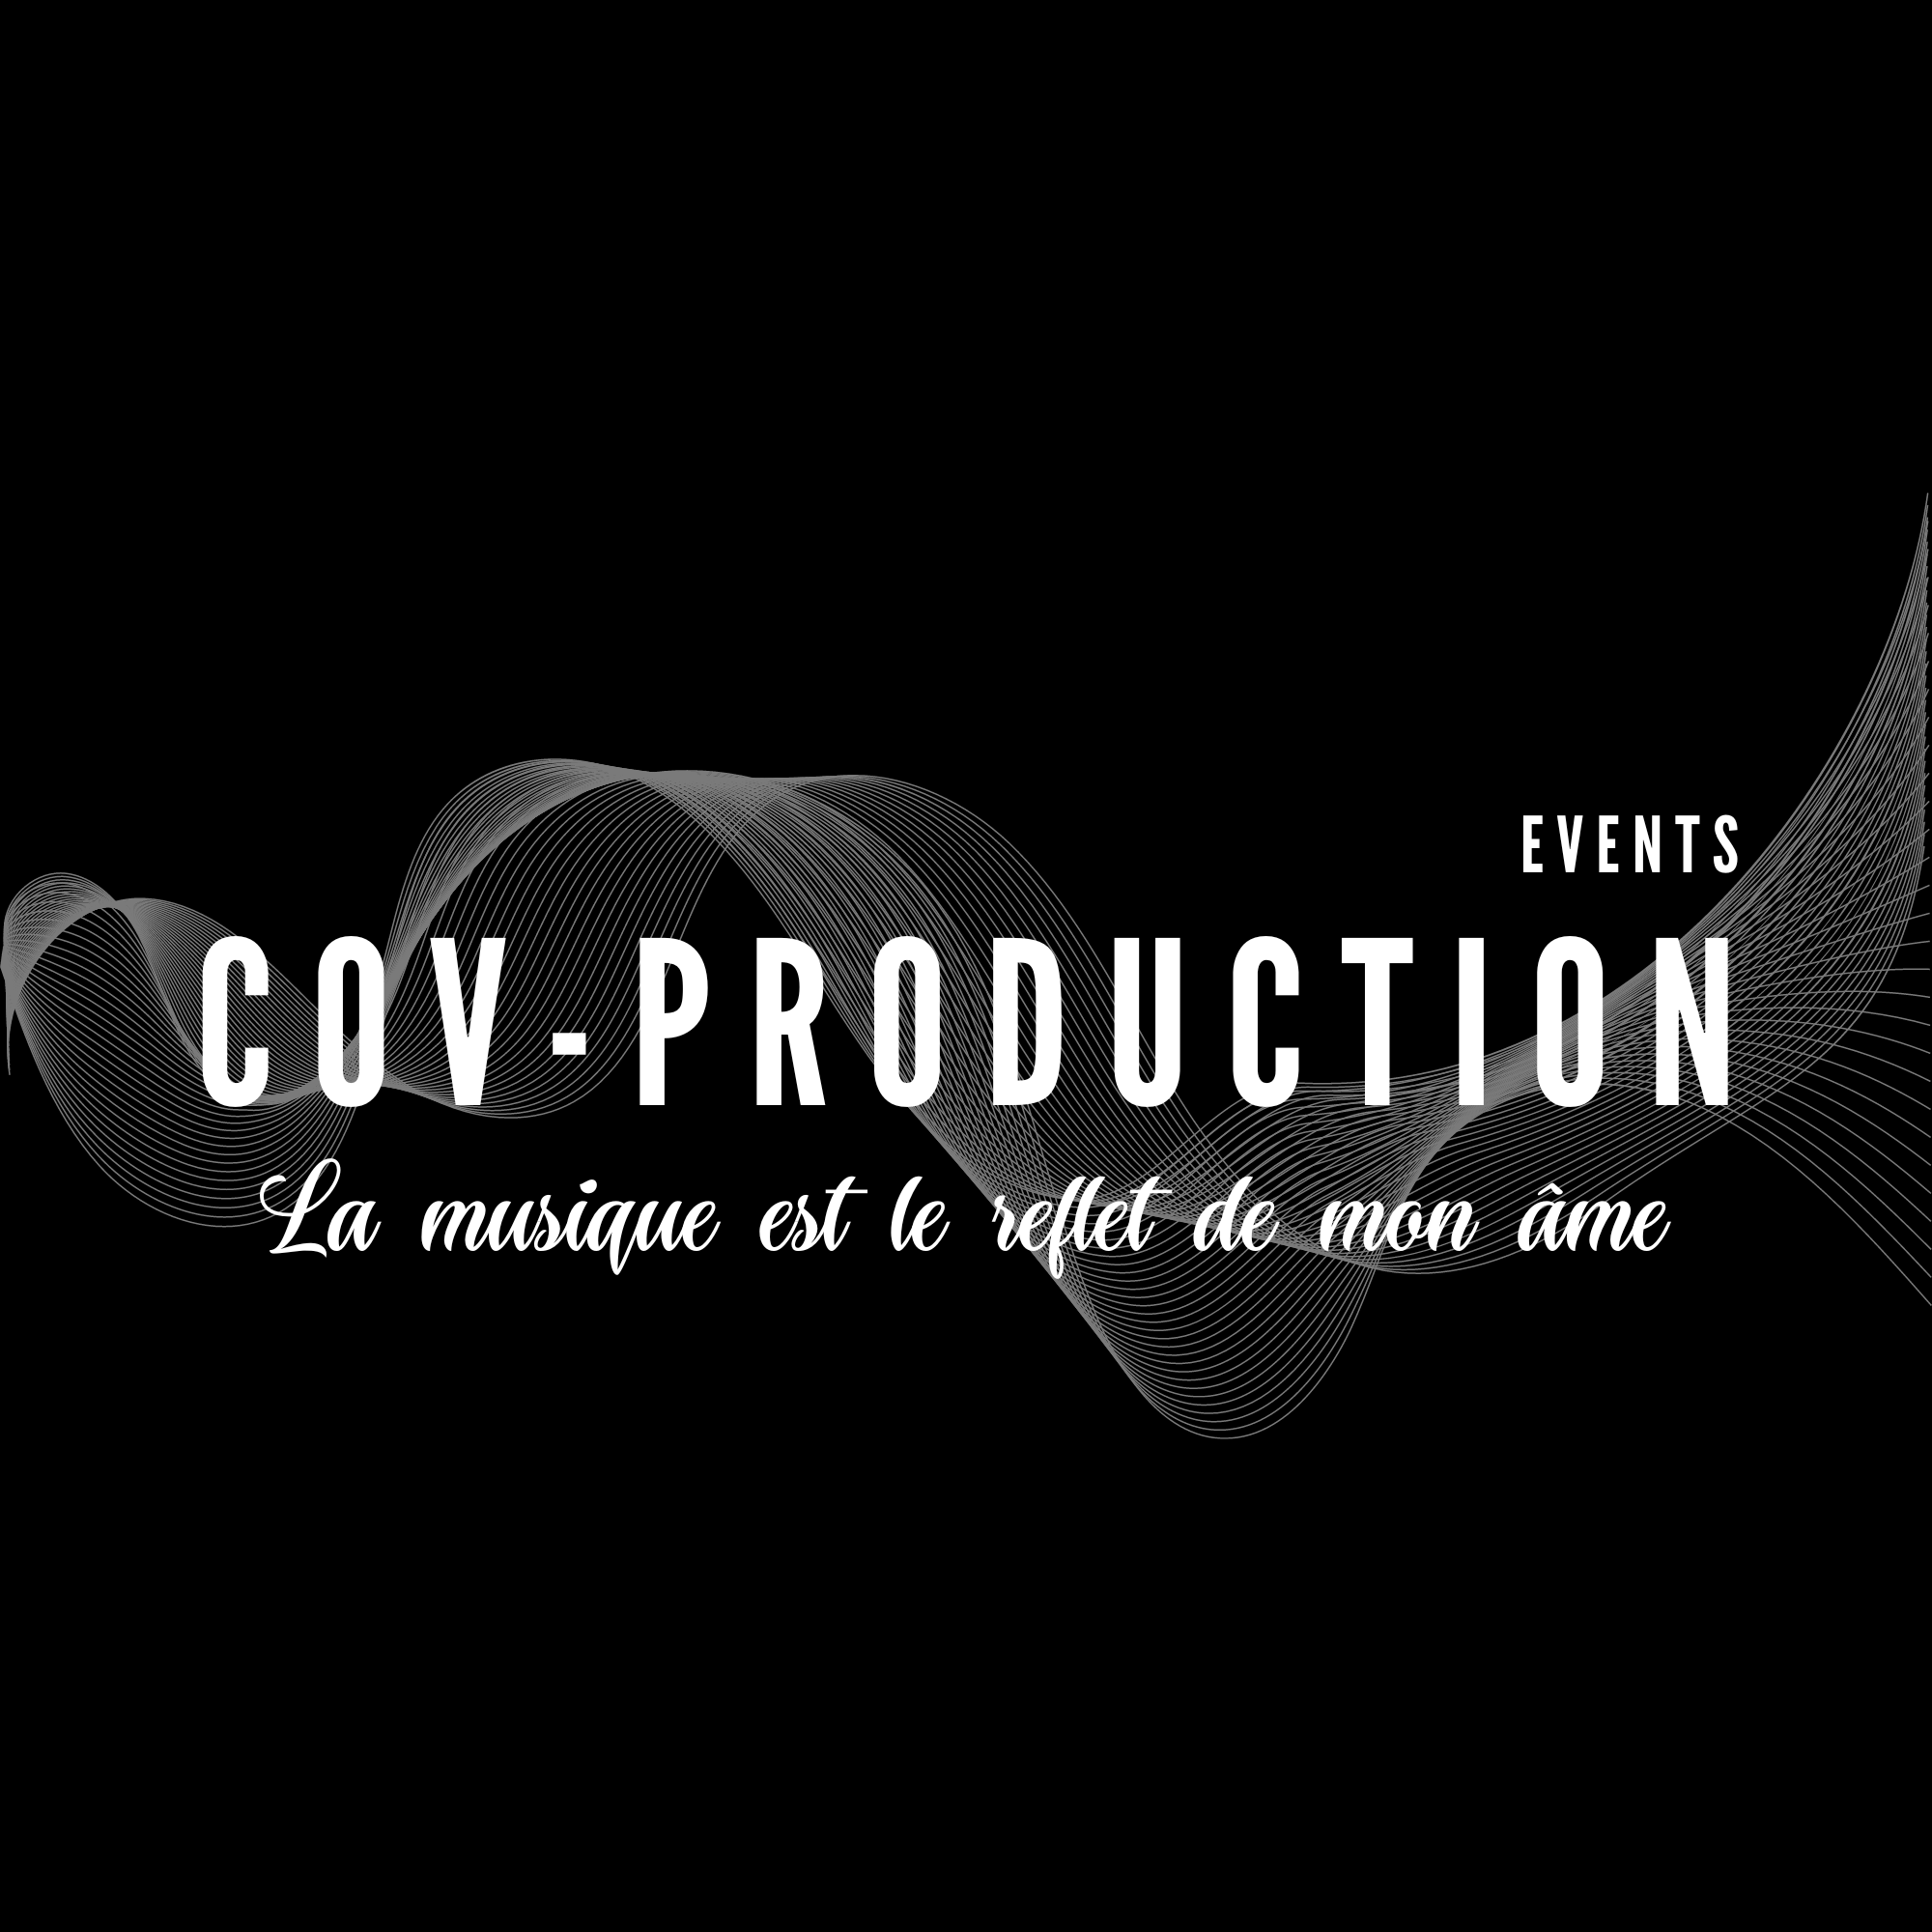 Cov Production